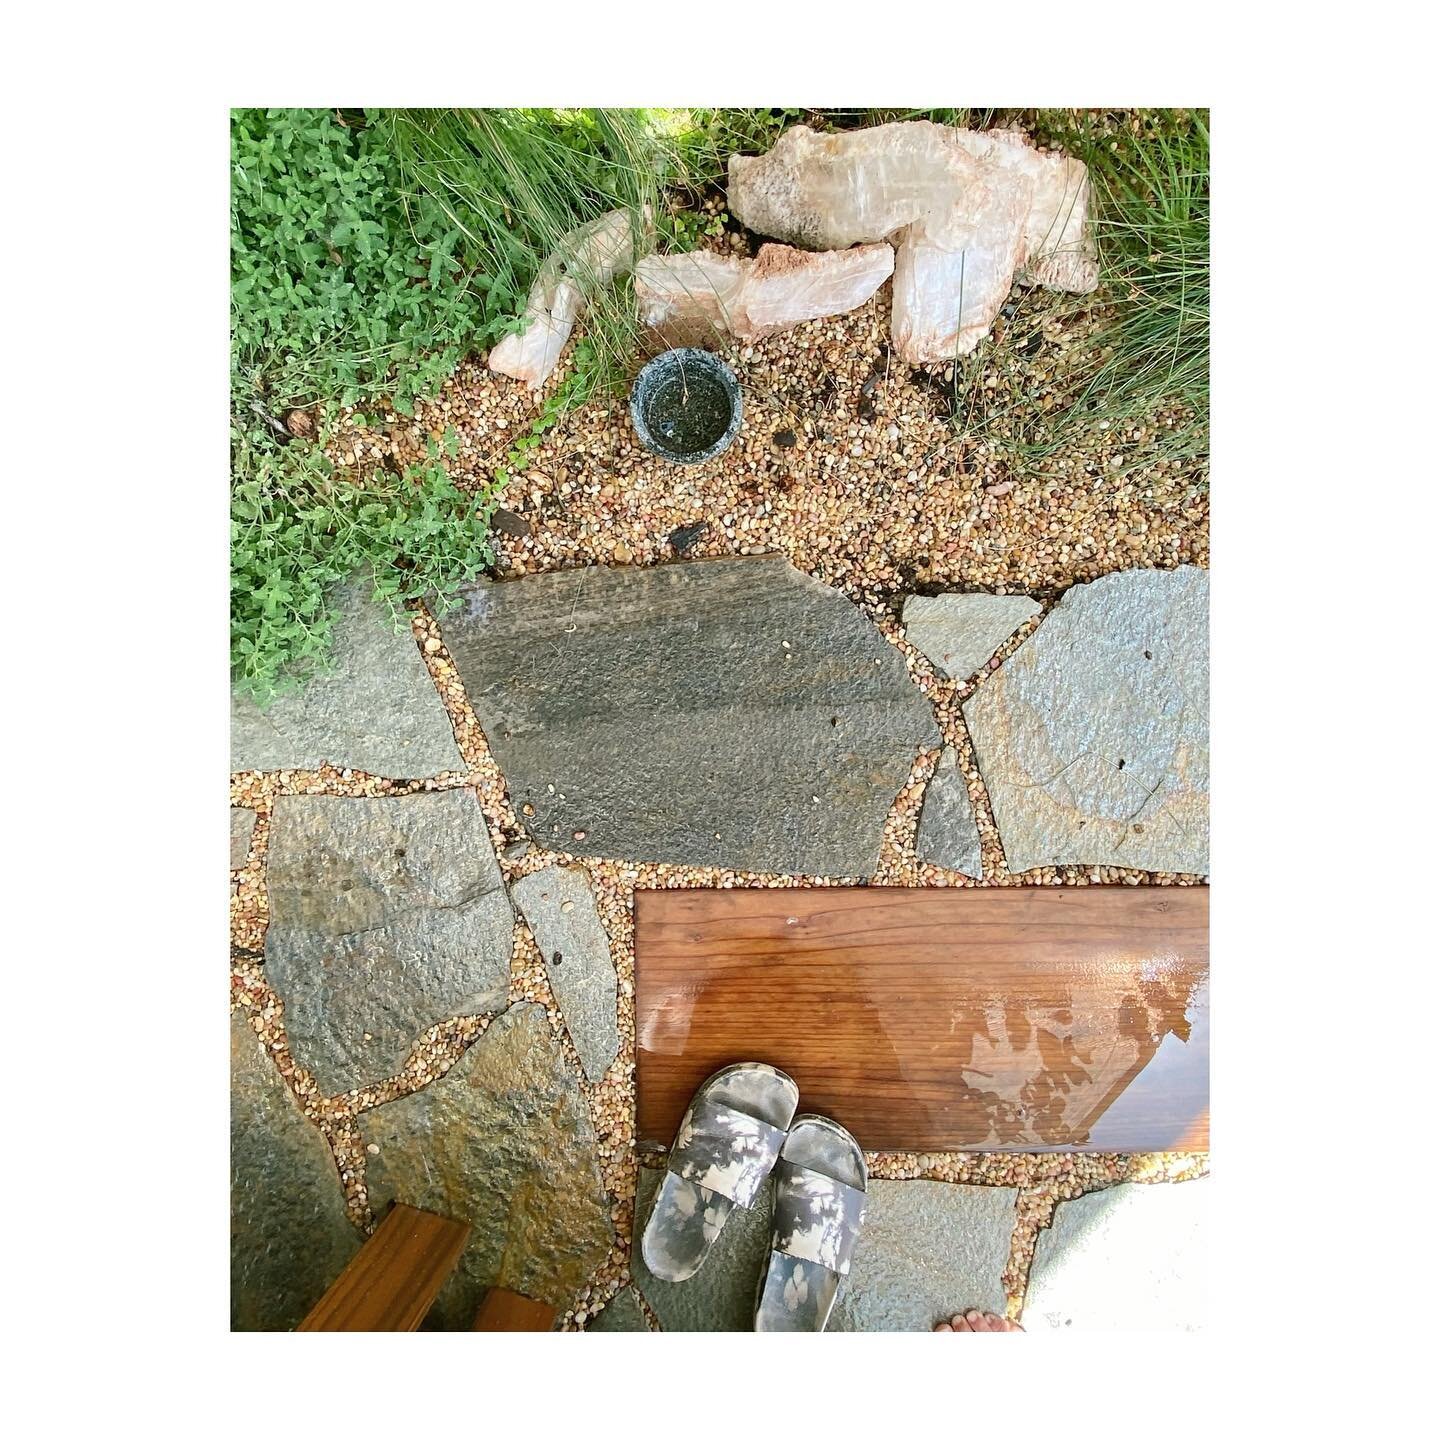 Gardens for when you take your shoes off.

📷 @__kfo__ 

#garden #backyard #californiagarden #design #gardendesign #landscapedesign #homedesign #art #landscapearchitecture #droughttolerant #plants #studiomoonya